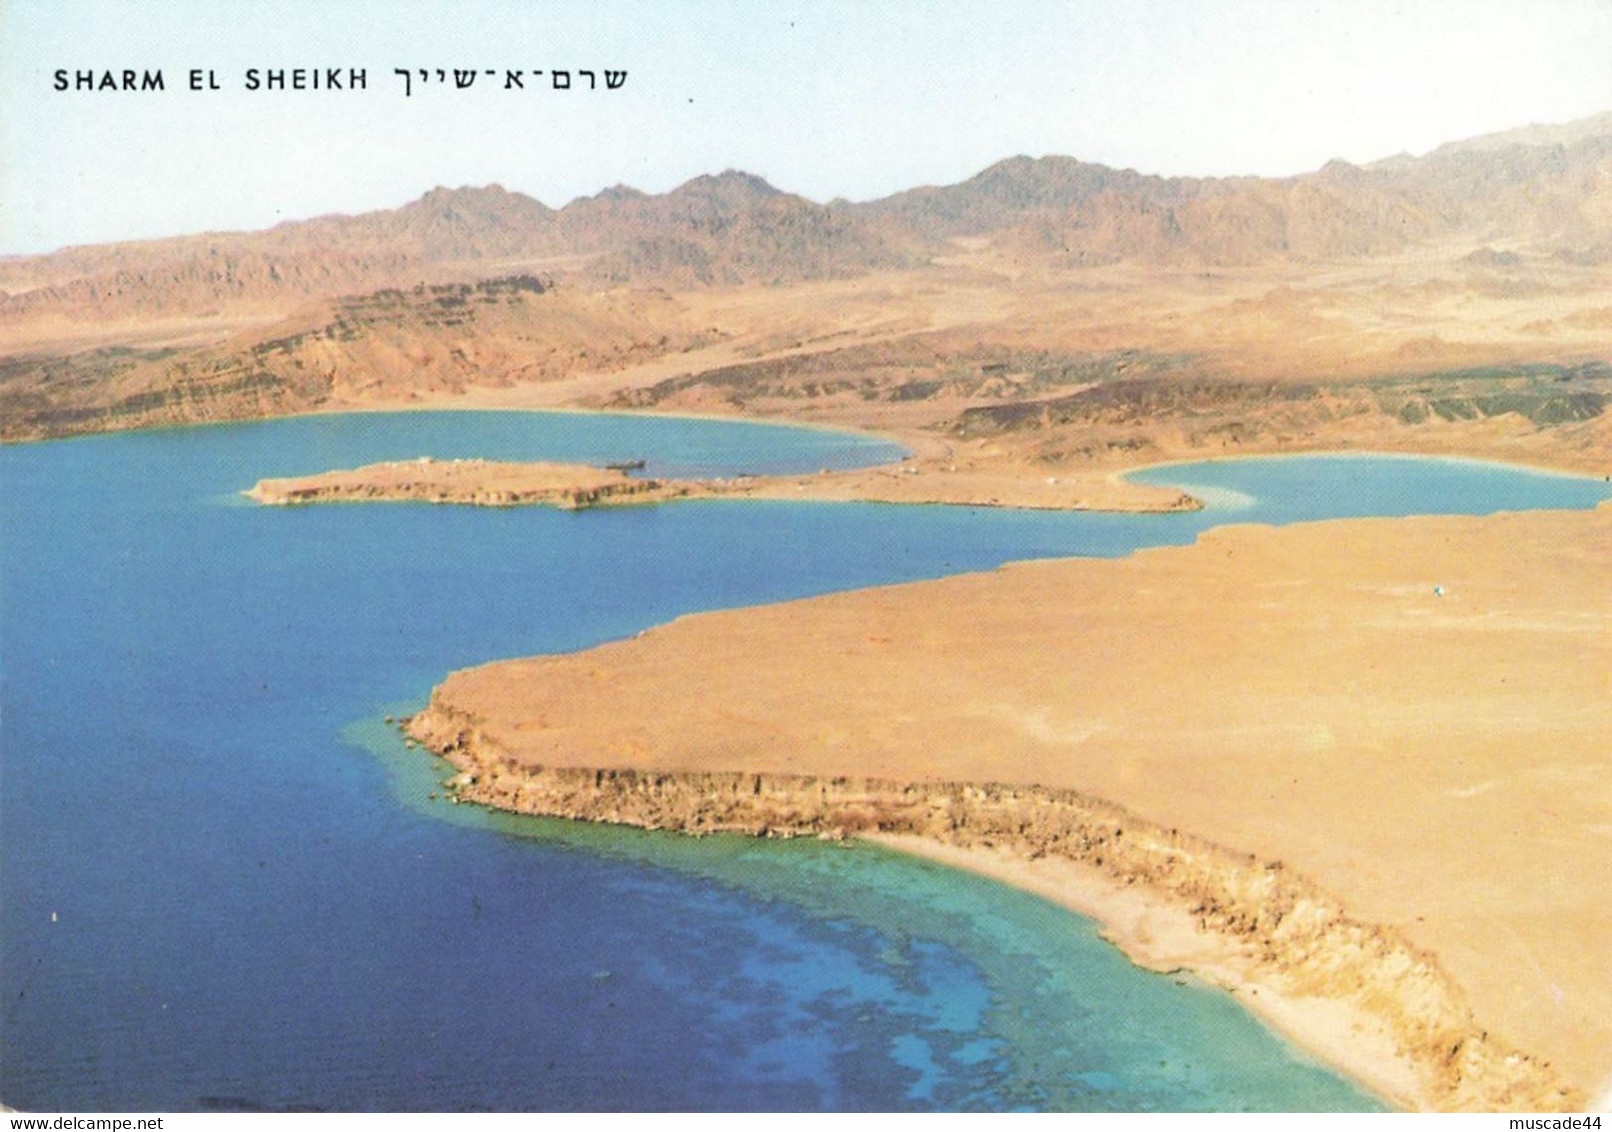 SHARM EL SHEIKH - Sharm El Sheikh